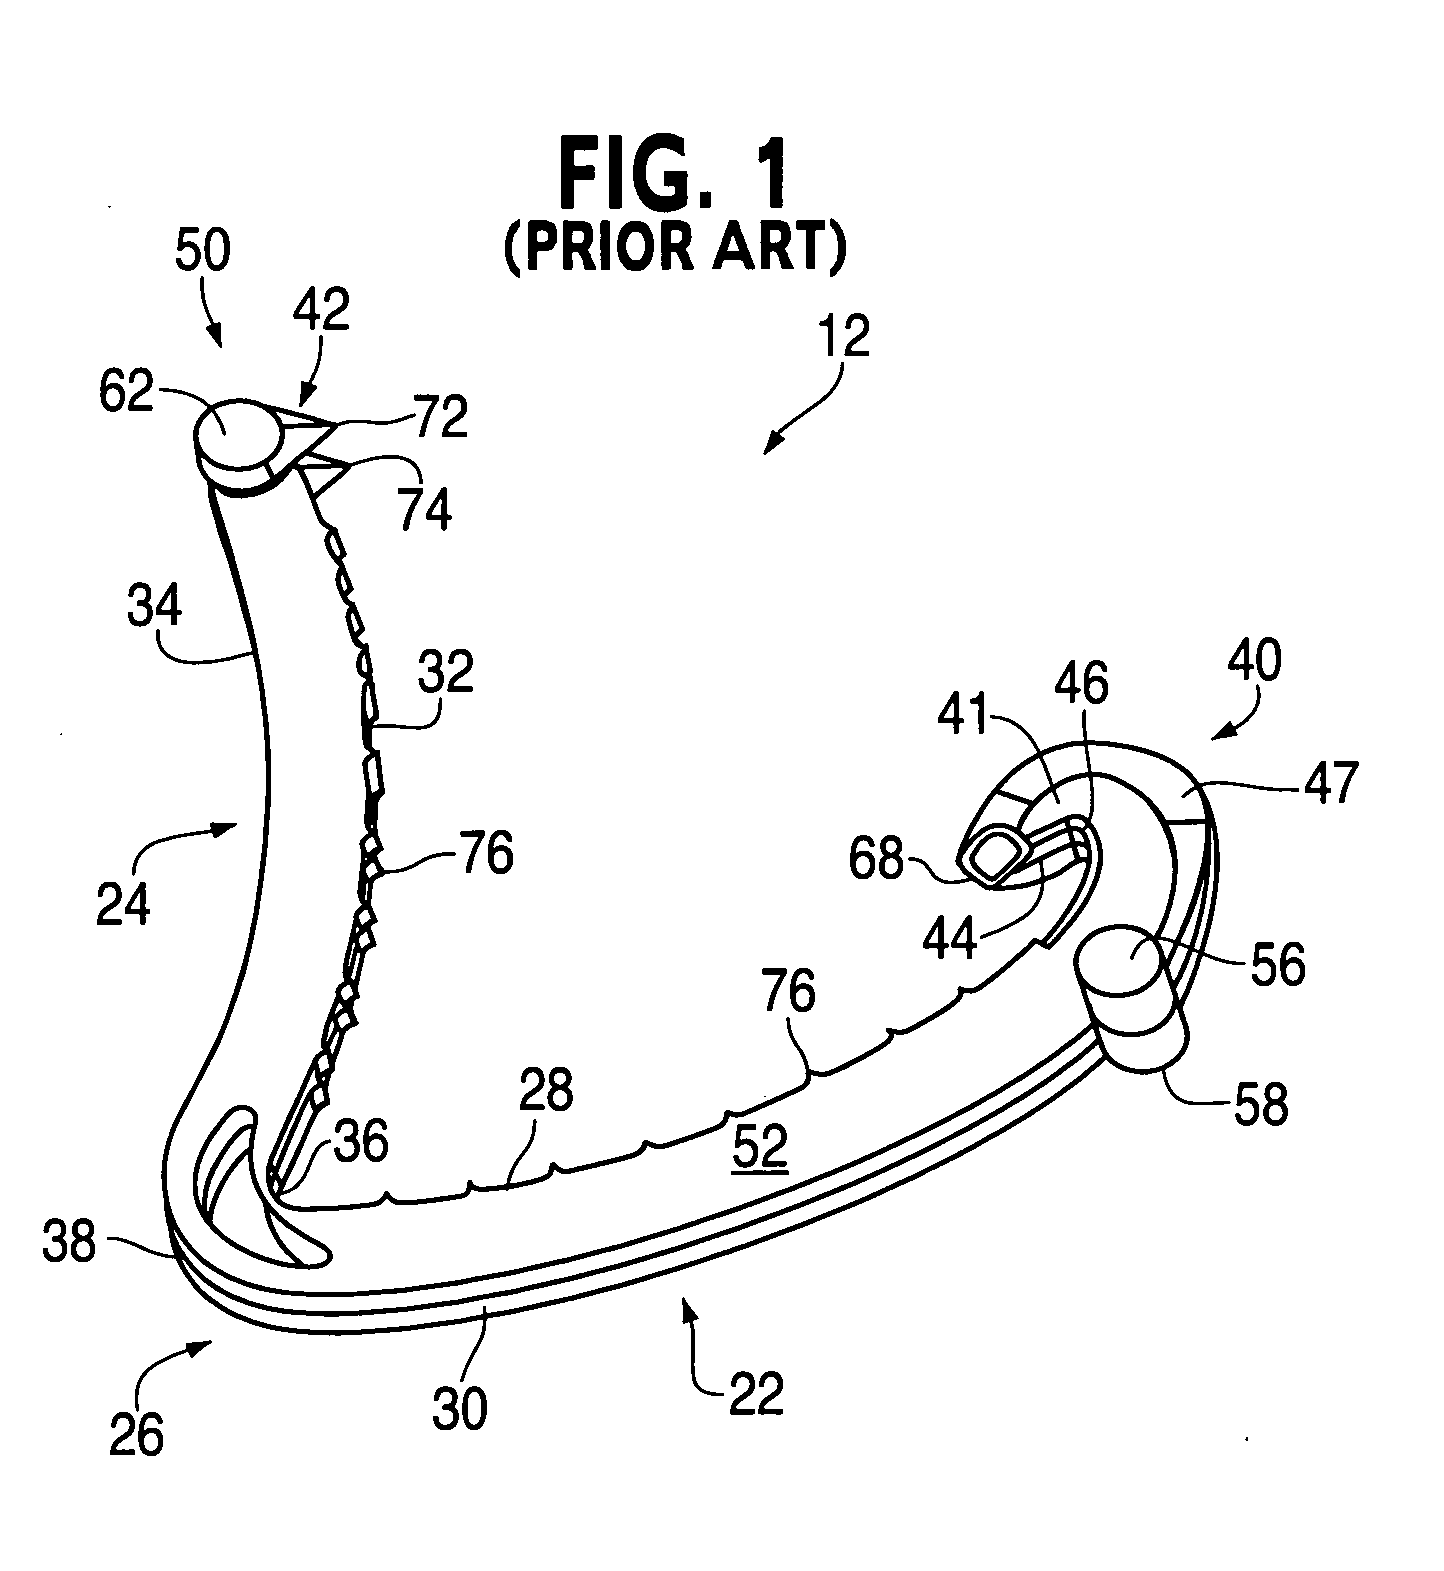 Non-snag polymer ligating clip